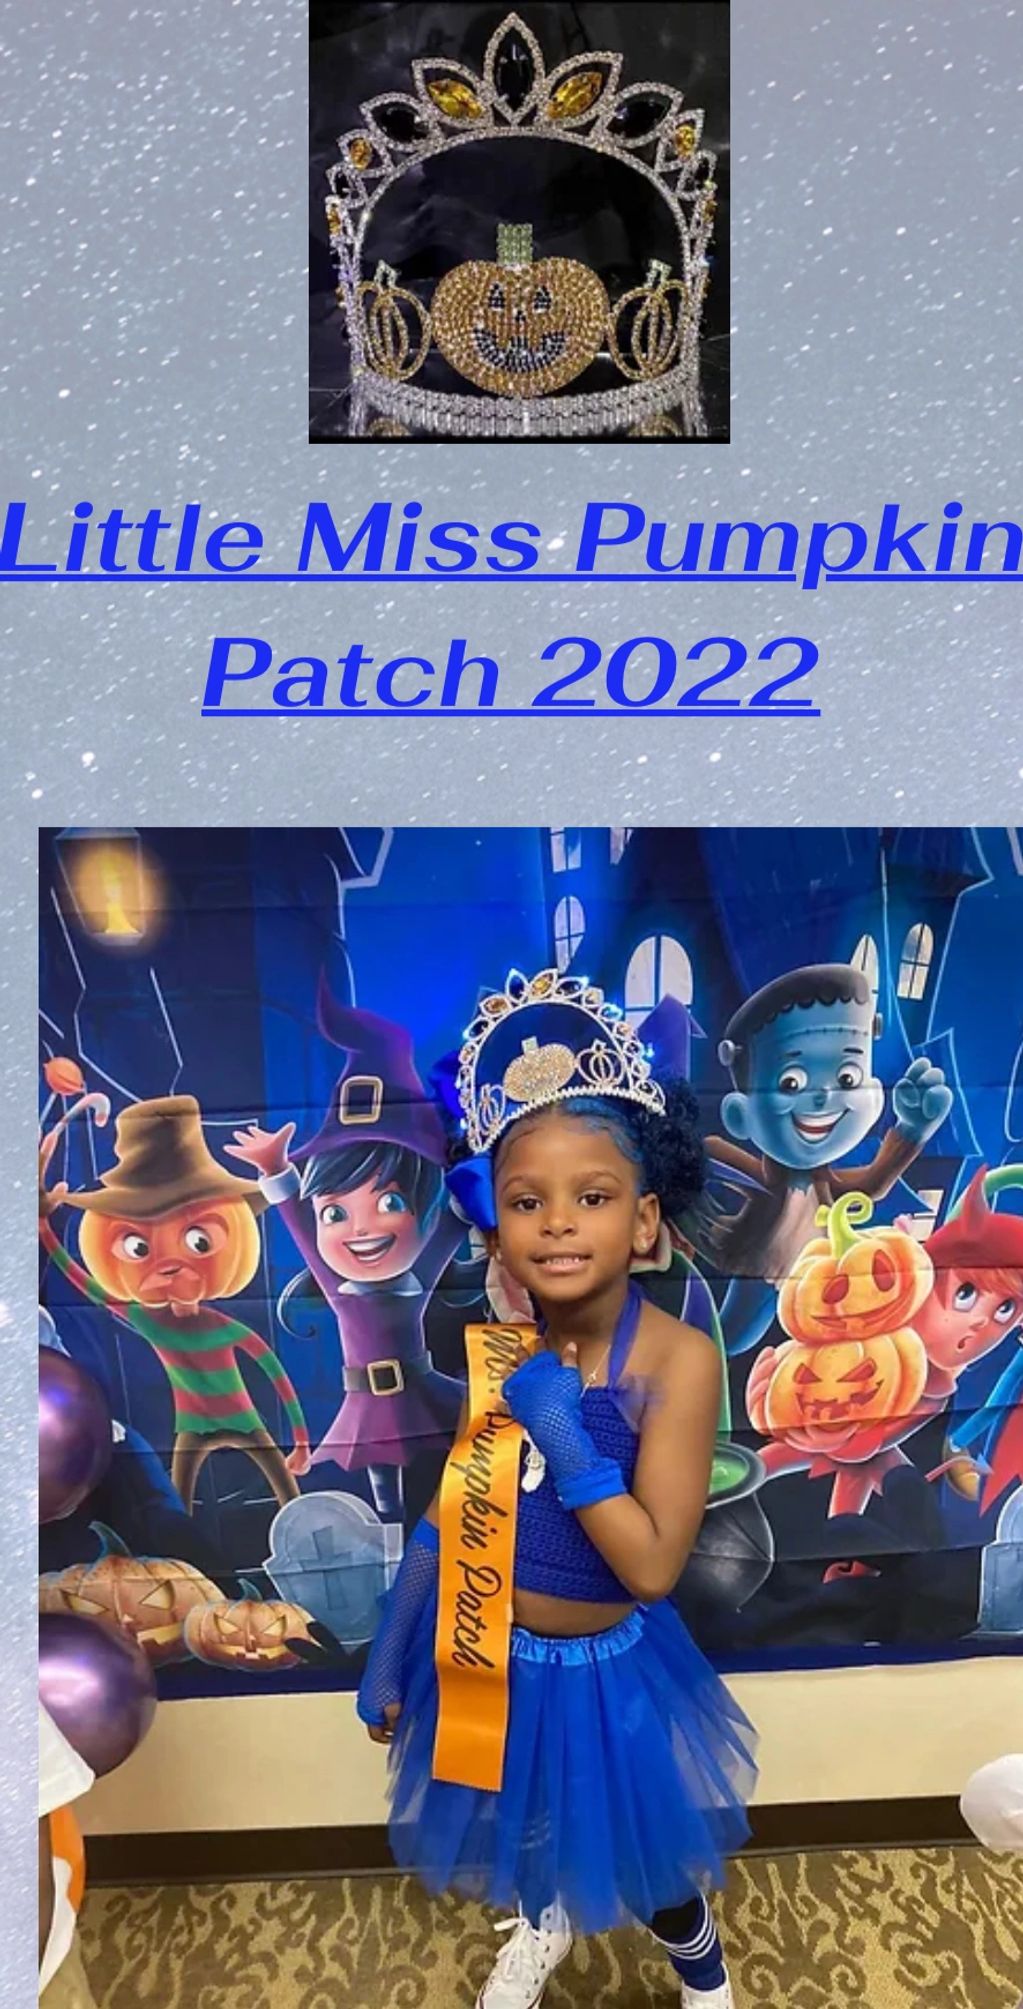  little miss pumpkin patch 2022
Brooklyn aka the blue M&M